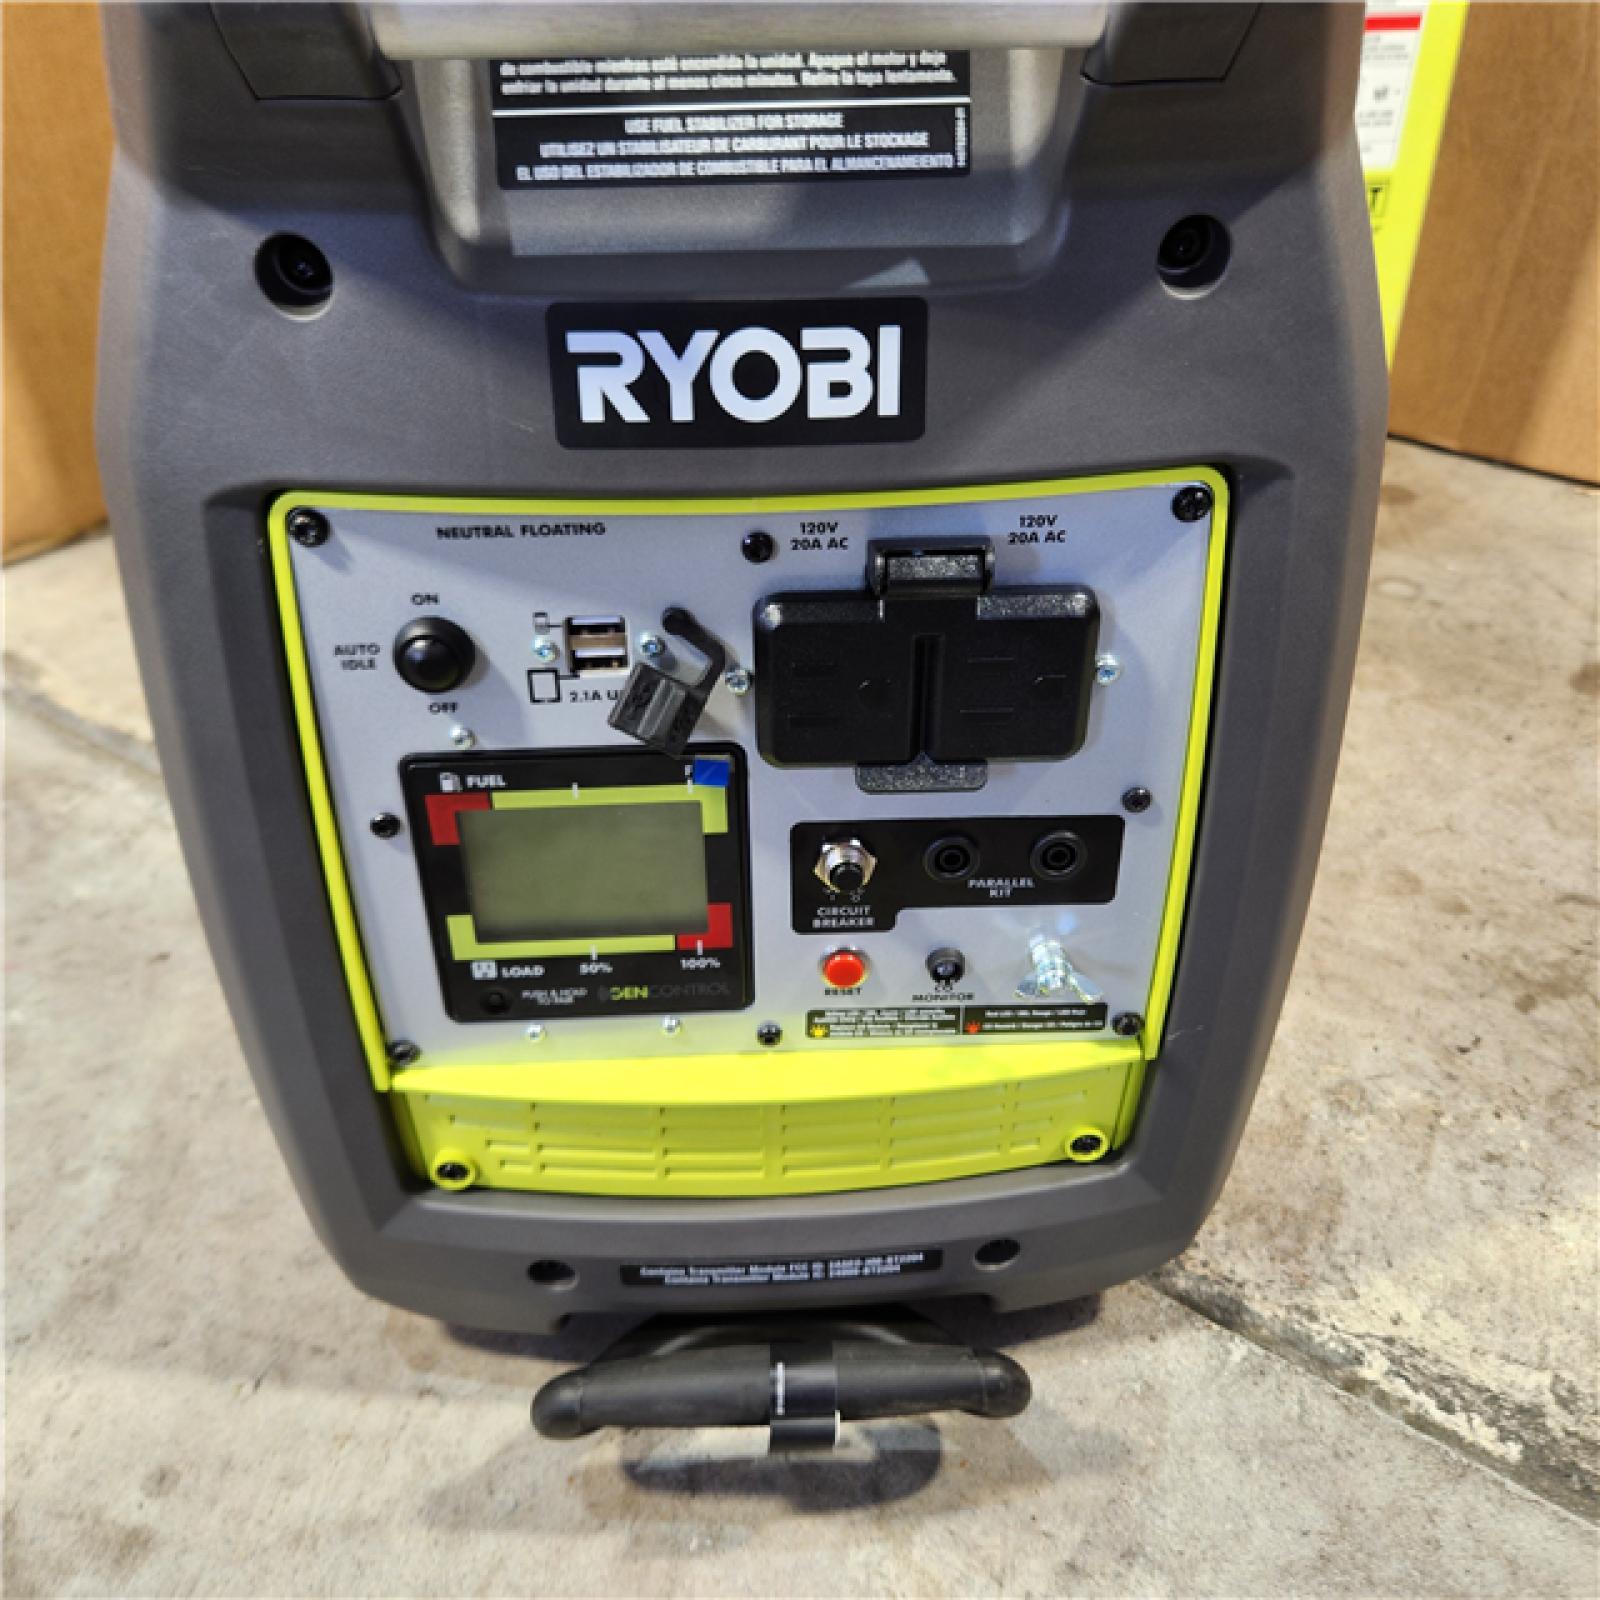 Houston Location - AS-IS RYOBI 2,300-Watt Recoil Start Bluetooth Super Quiet Gasoline Powered Digital Inverter Generator with CO Shutdown Sensor - Appears IN LIKE NEW Condition